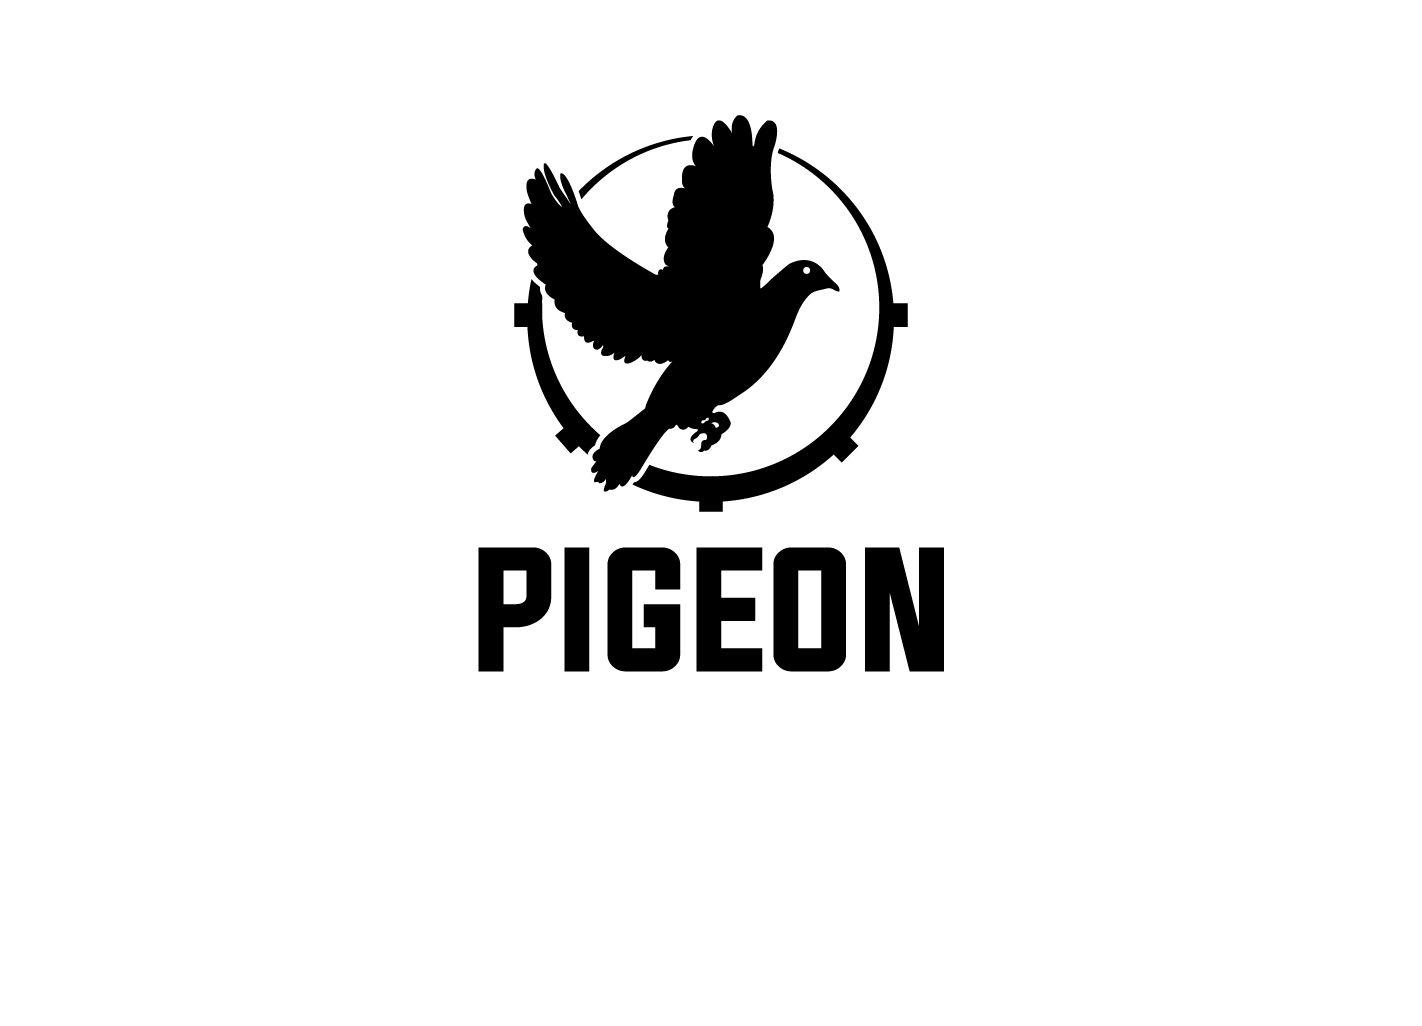 Pigeon Logo - Masculine, Professional, Entertainment Industry Logo Design